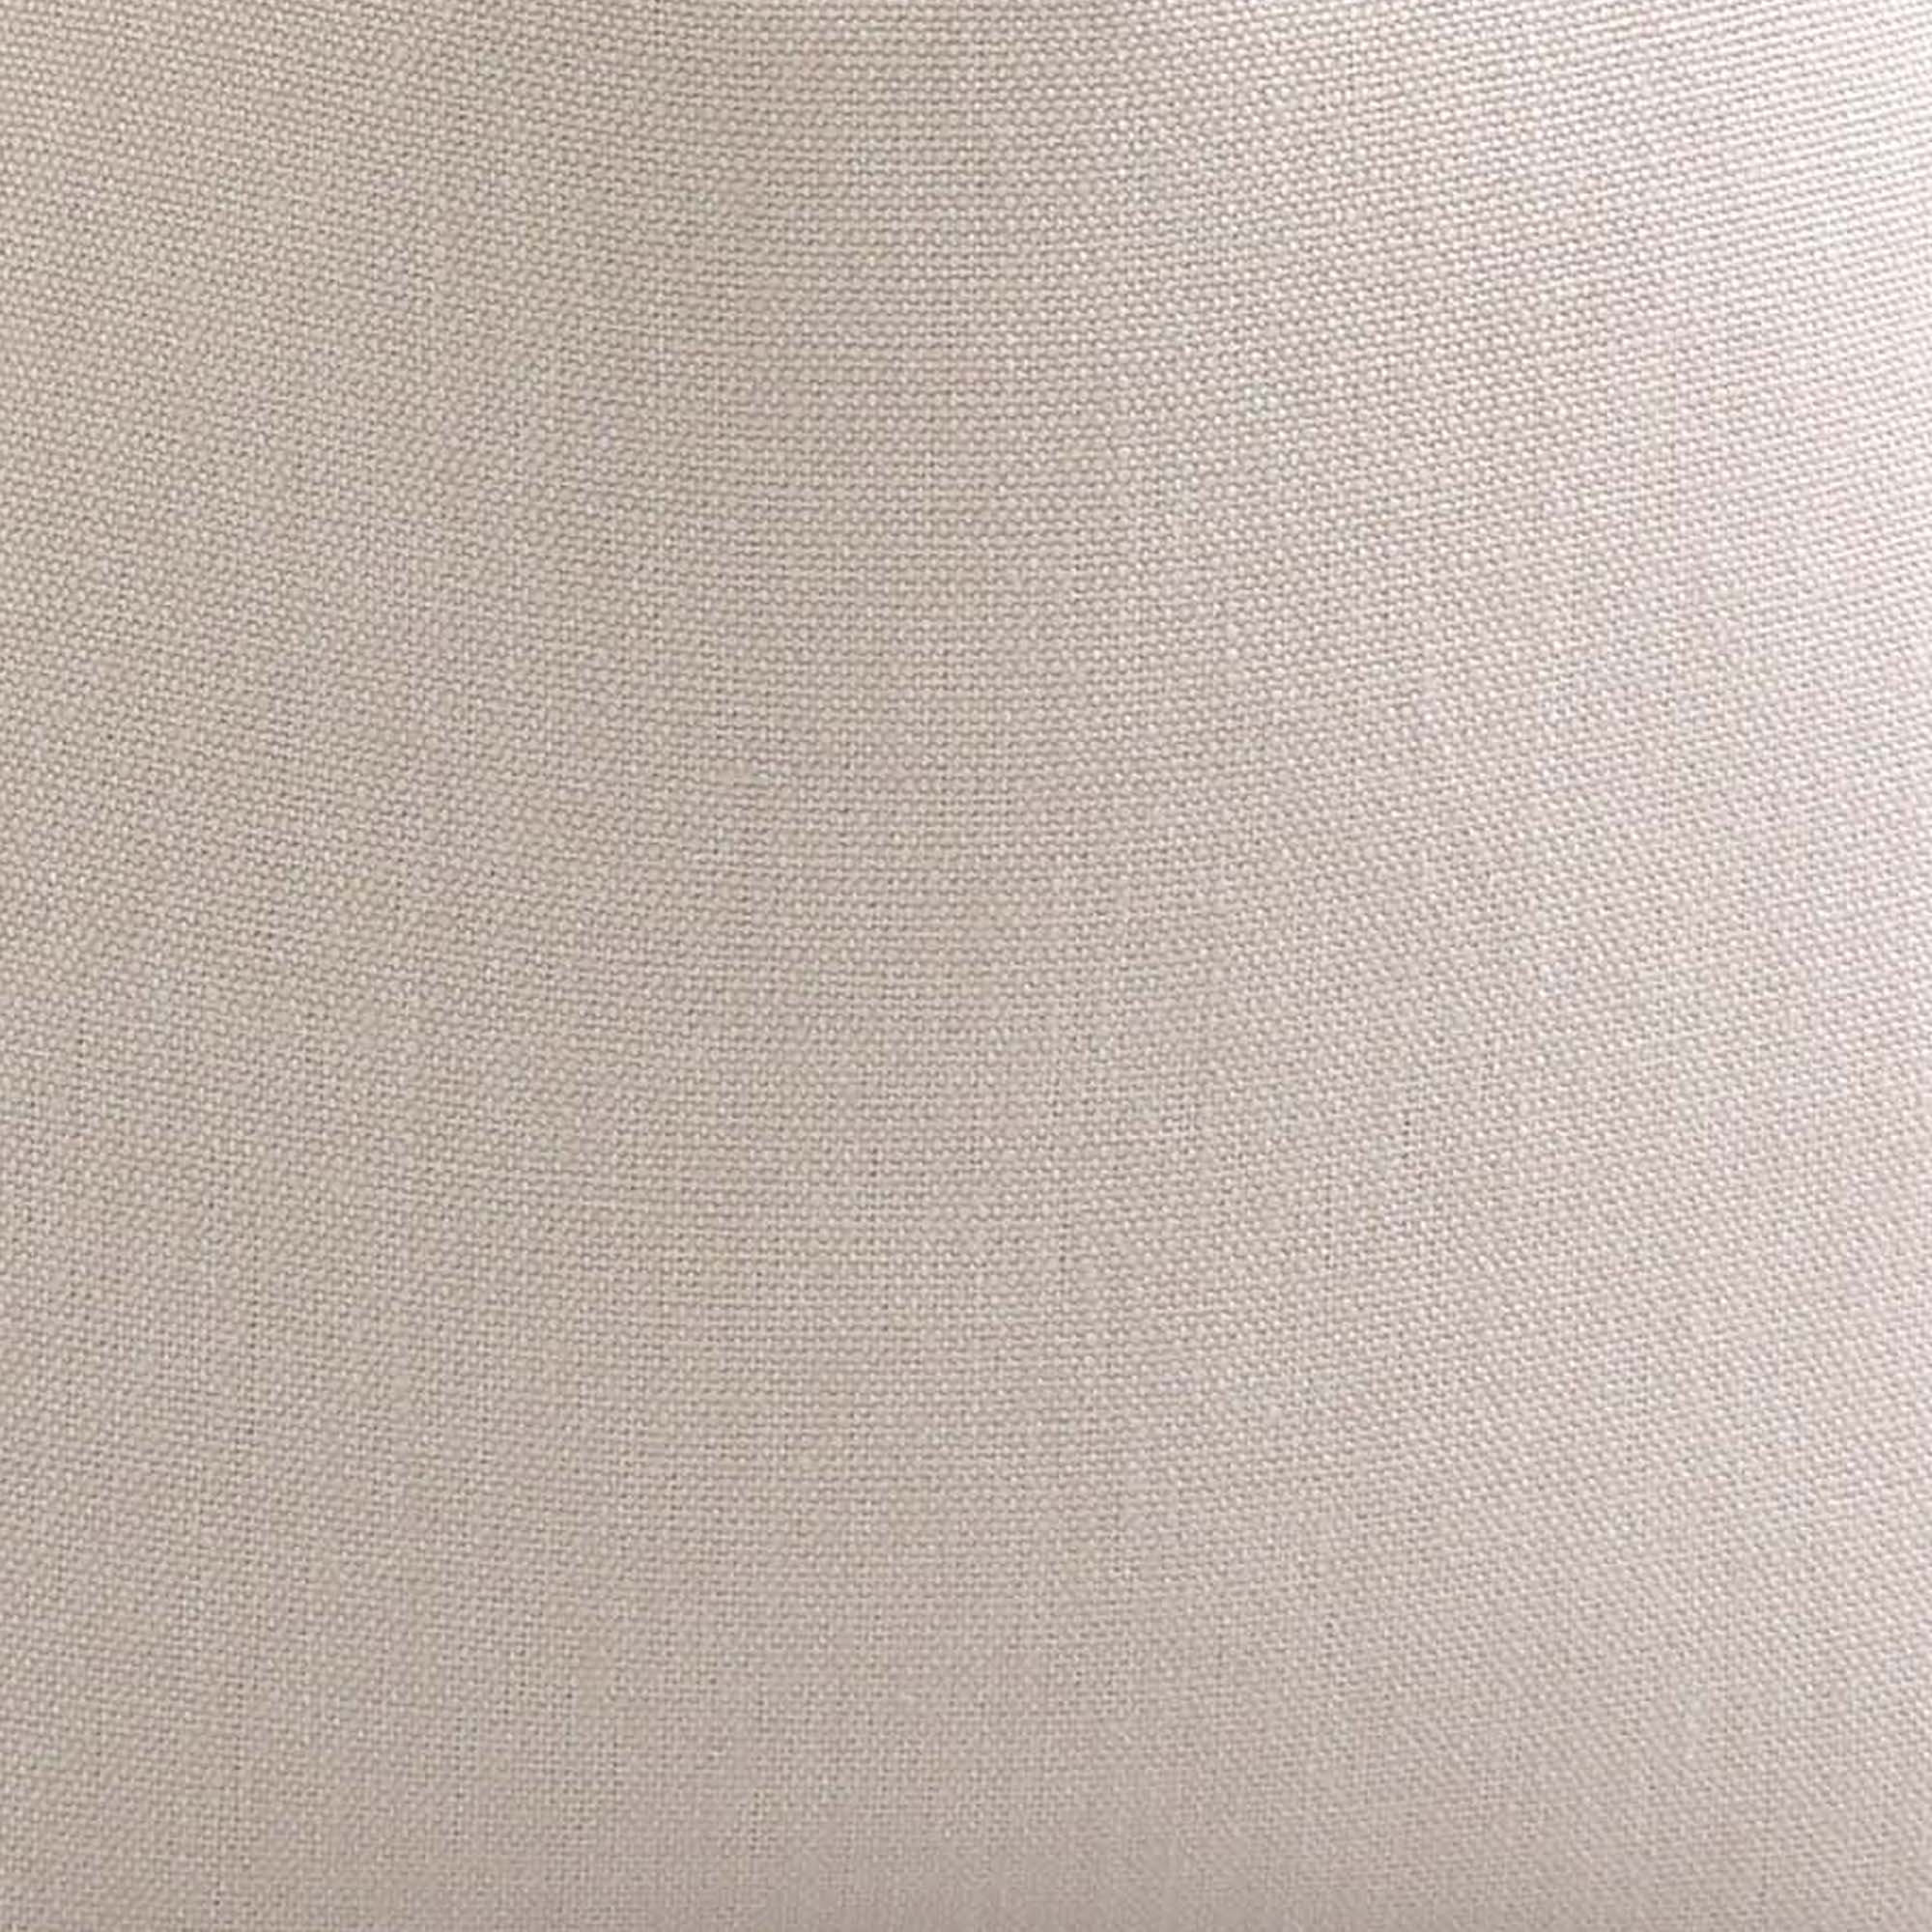 Tay Beige / 4x4 inch Fabric Swatch